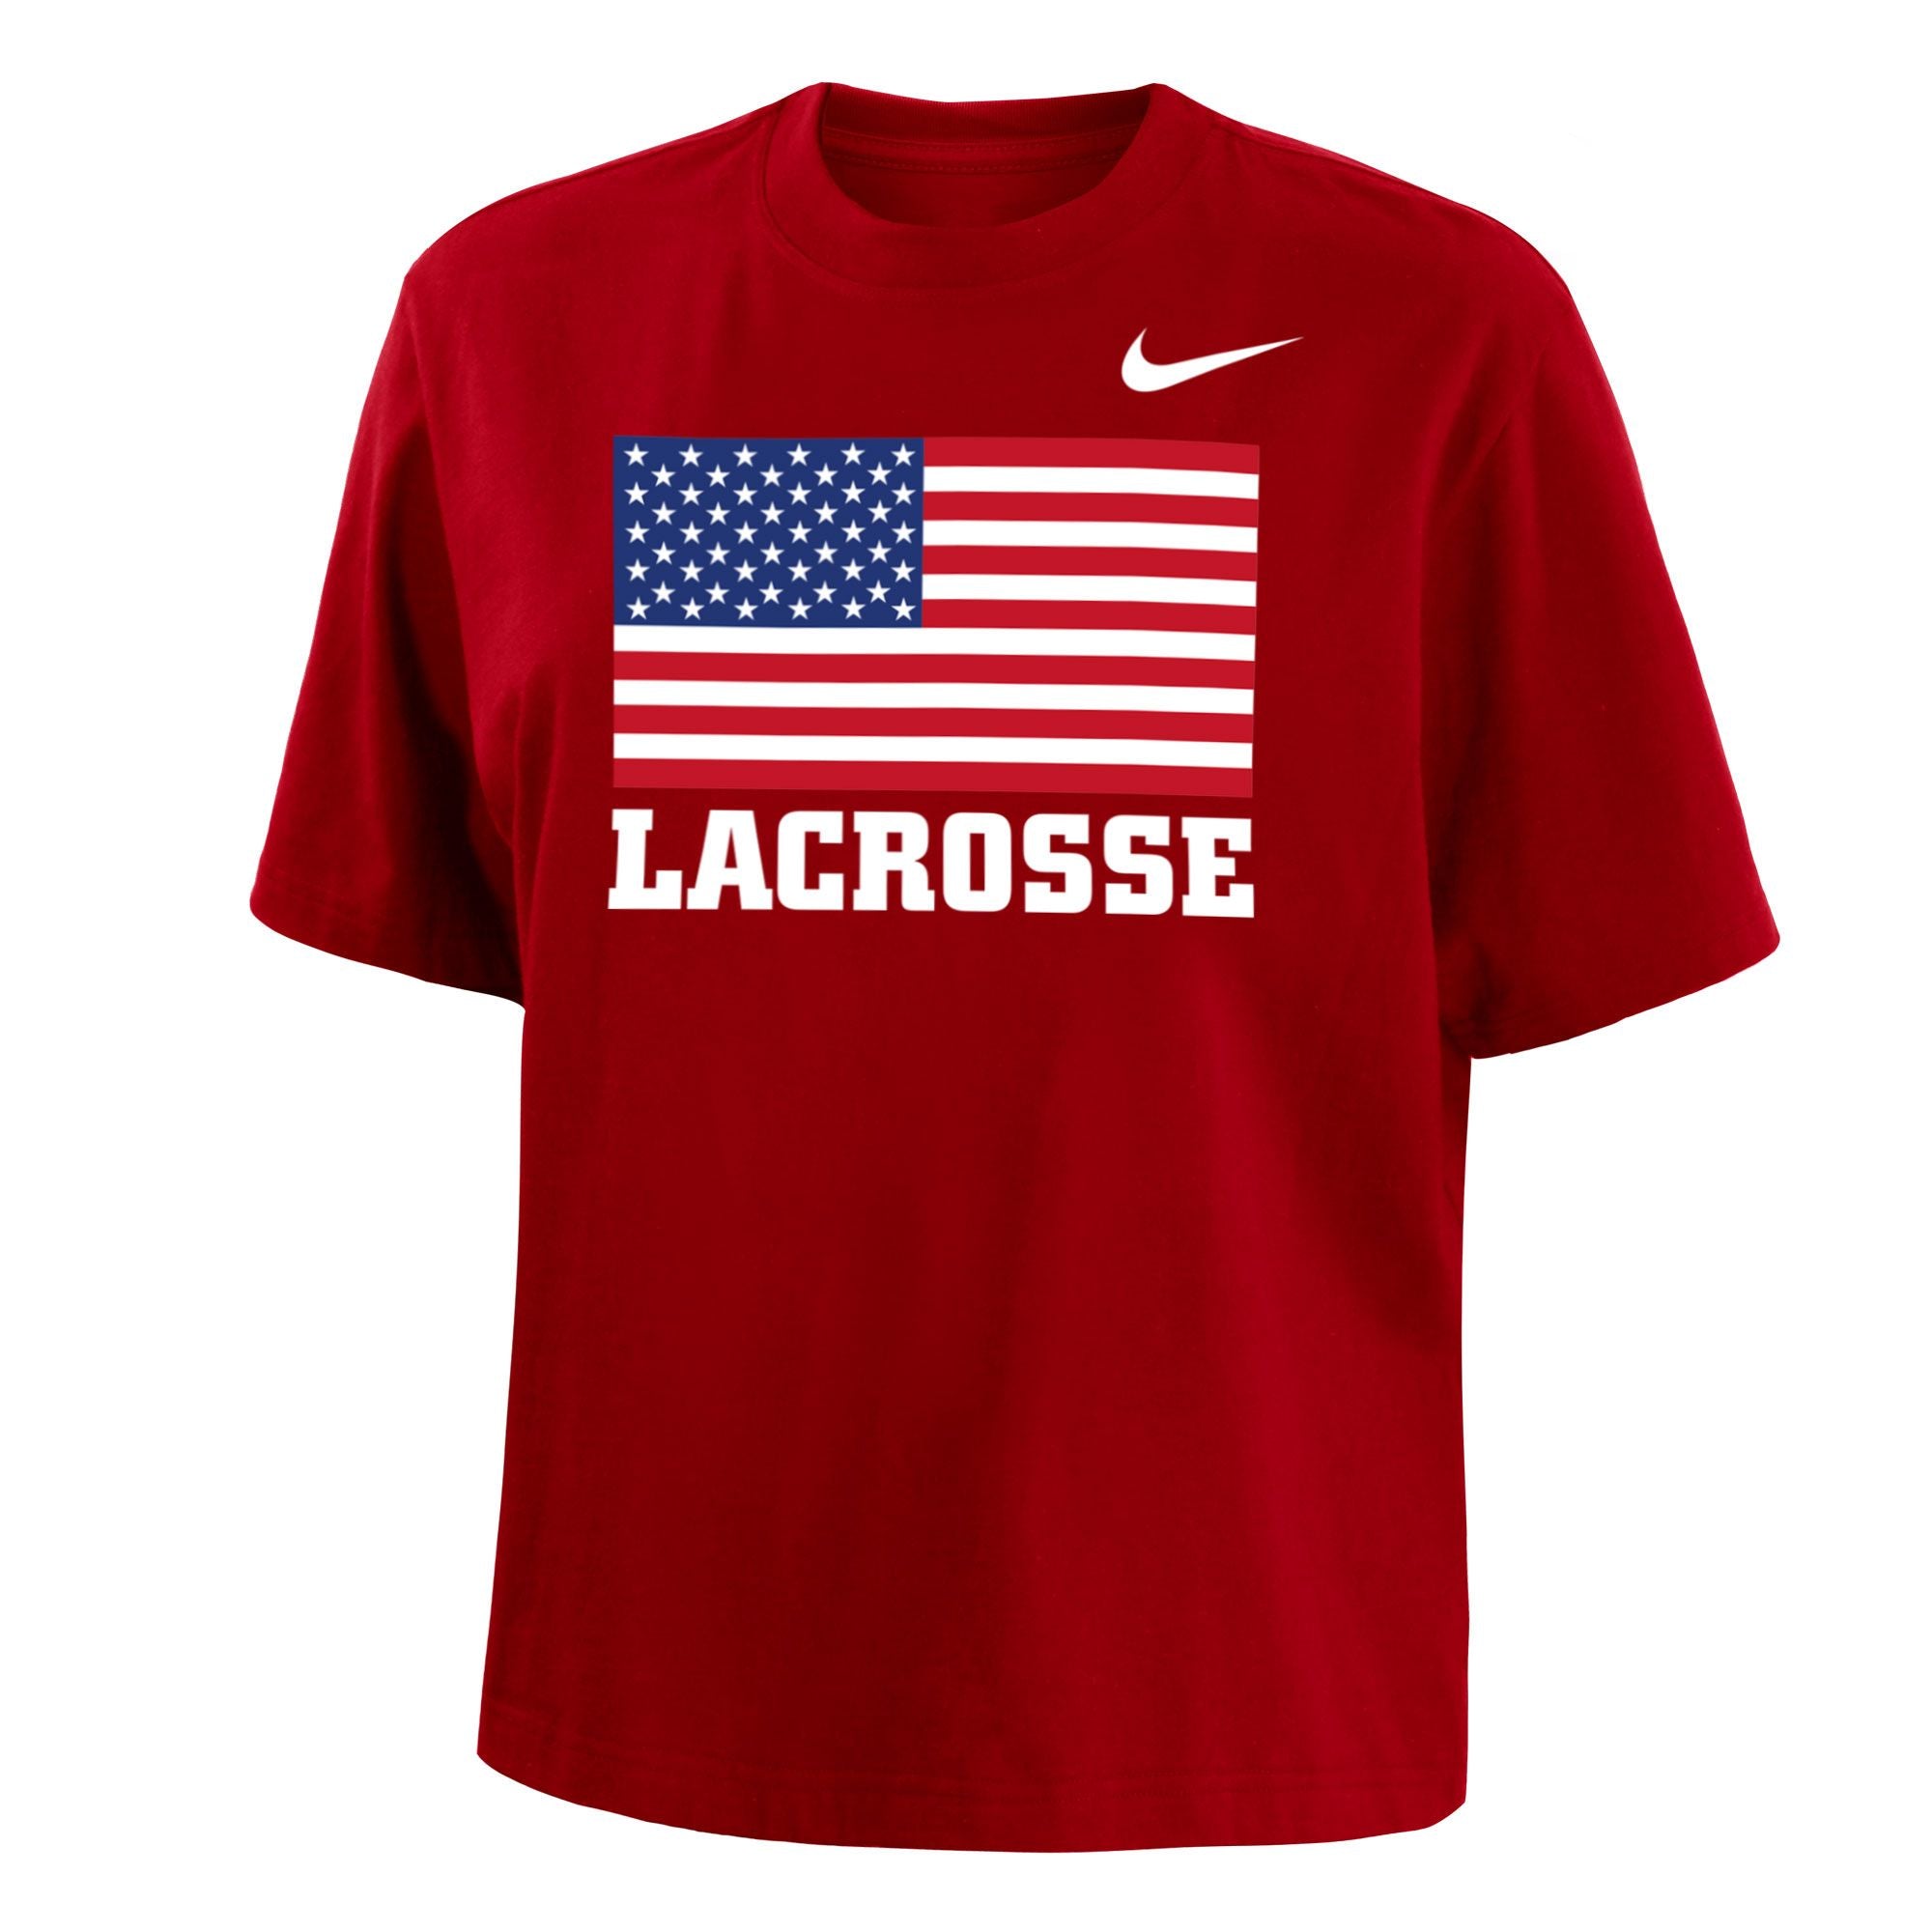 Women's USA Lacrosse Flag Nike Cotton Boxy Tee*